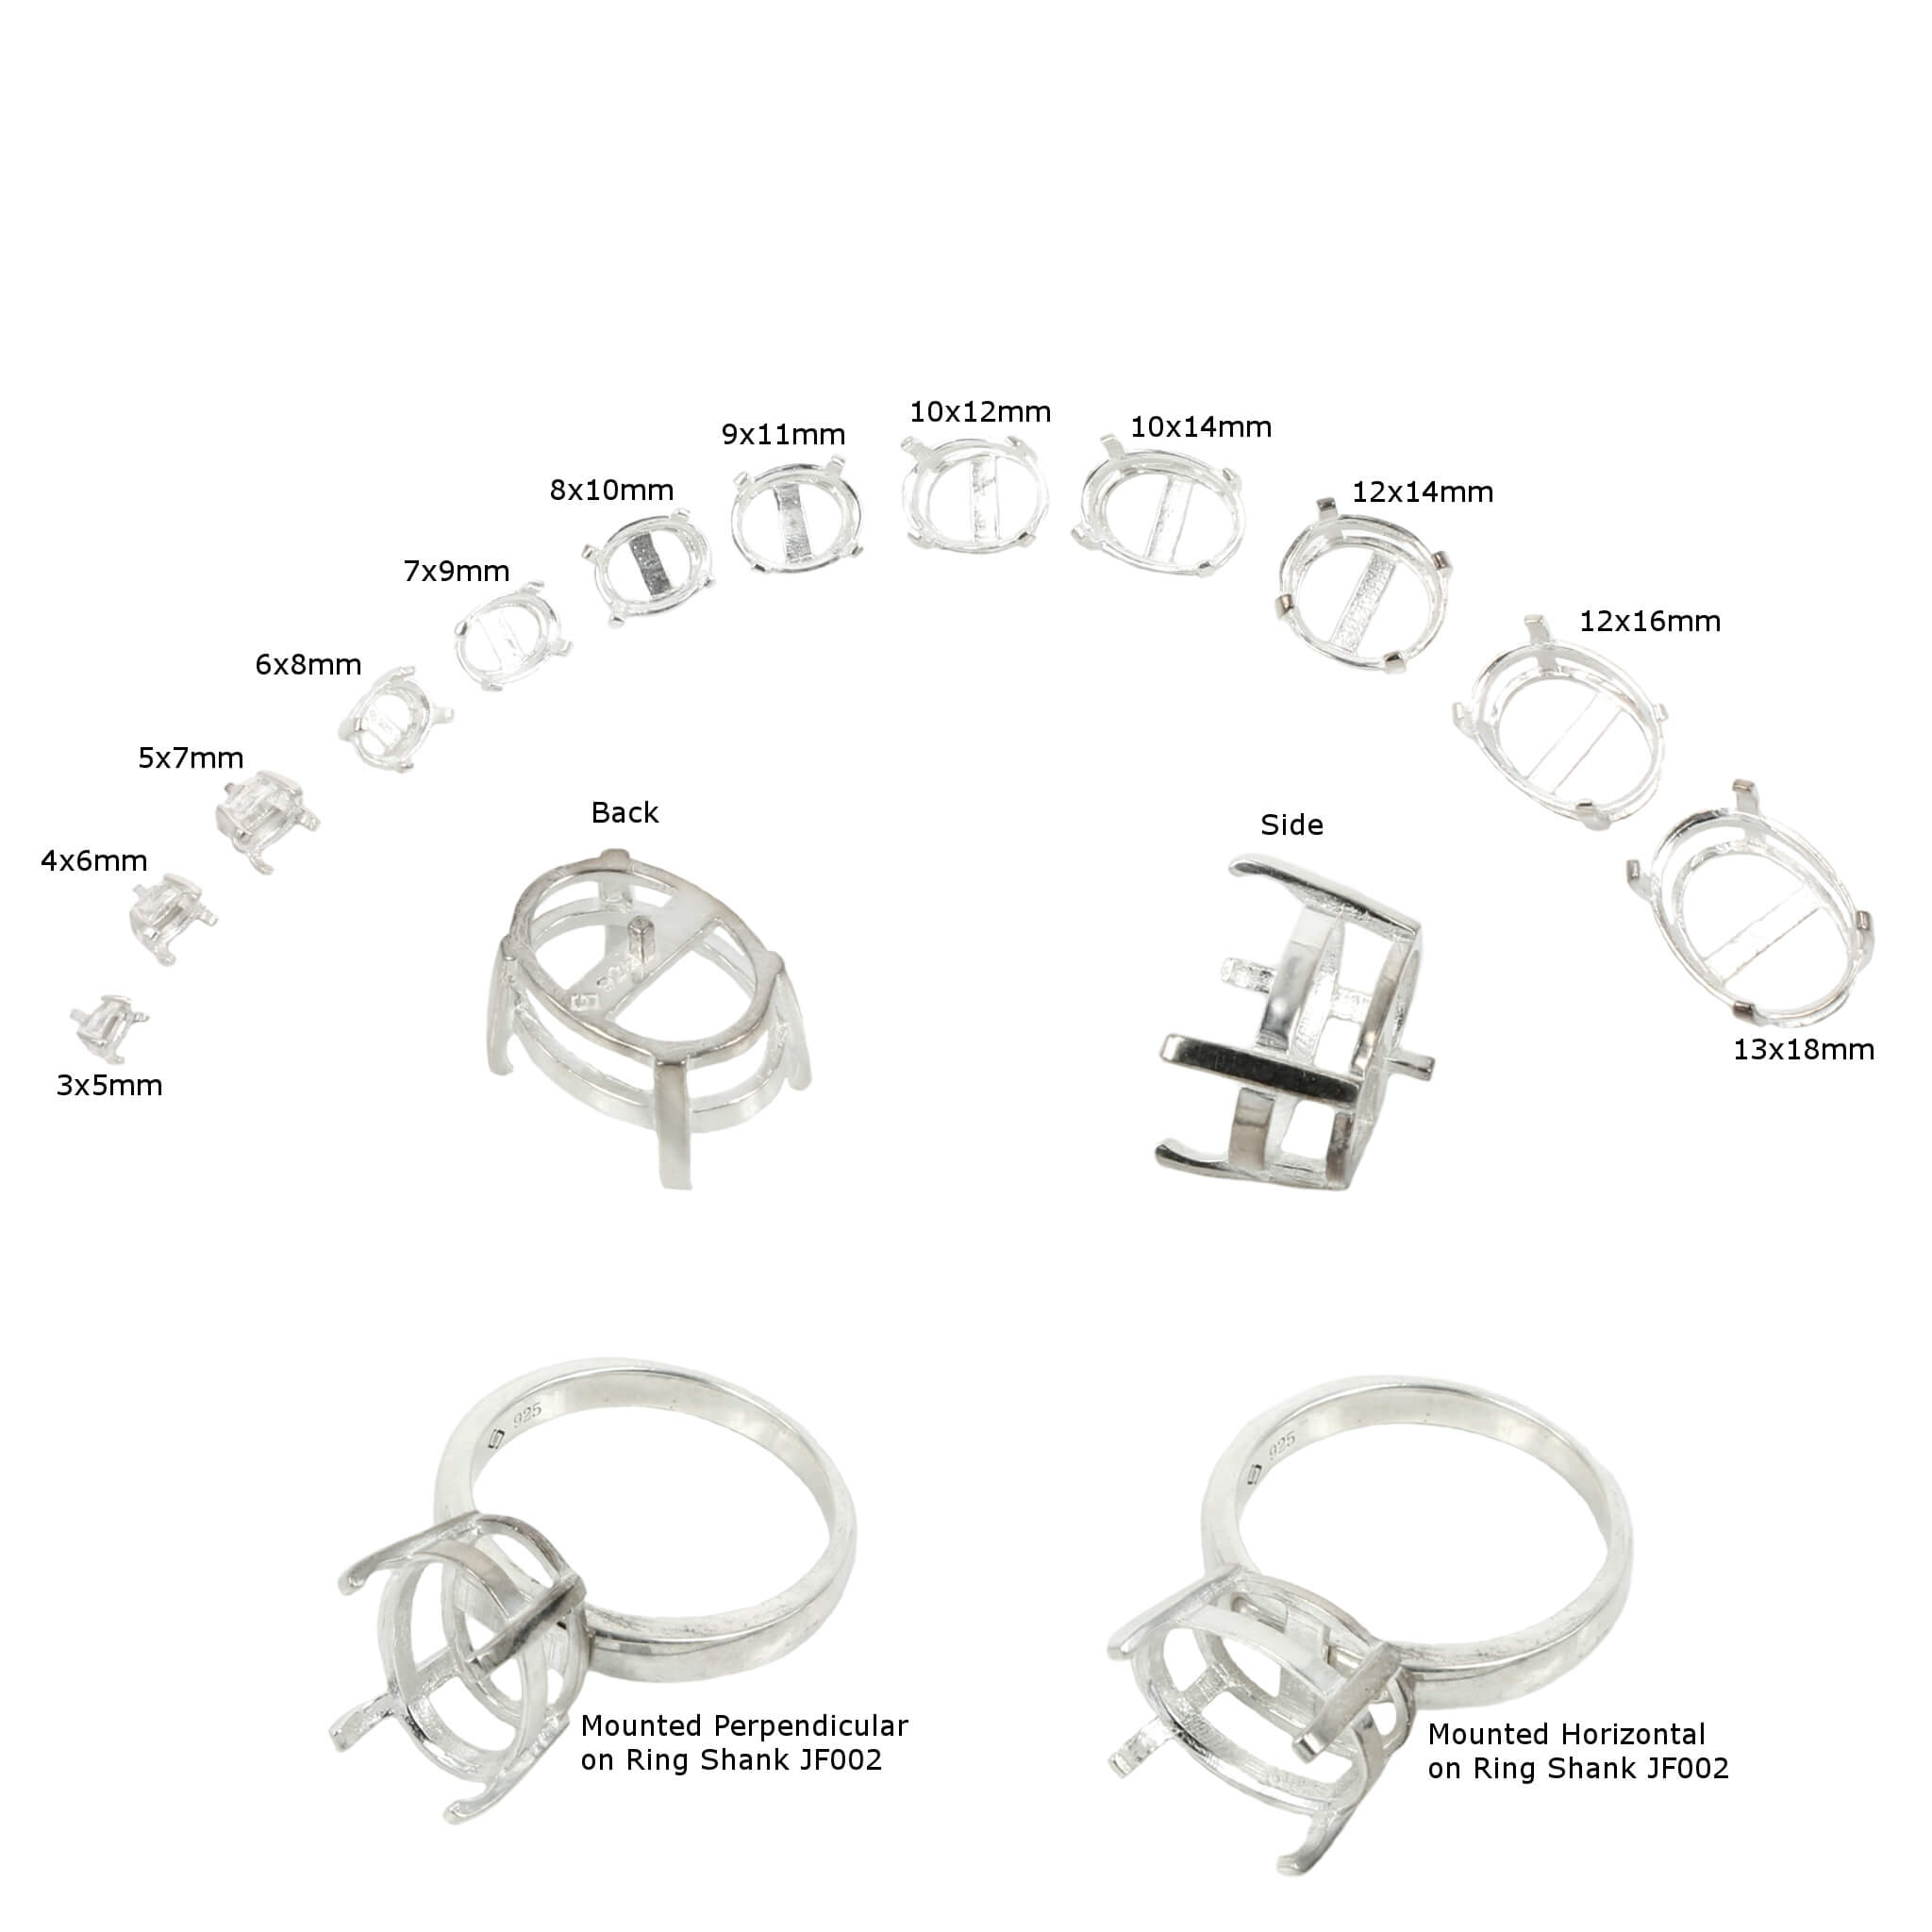 Oval Rings Settings - DIY Jewelry